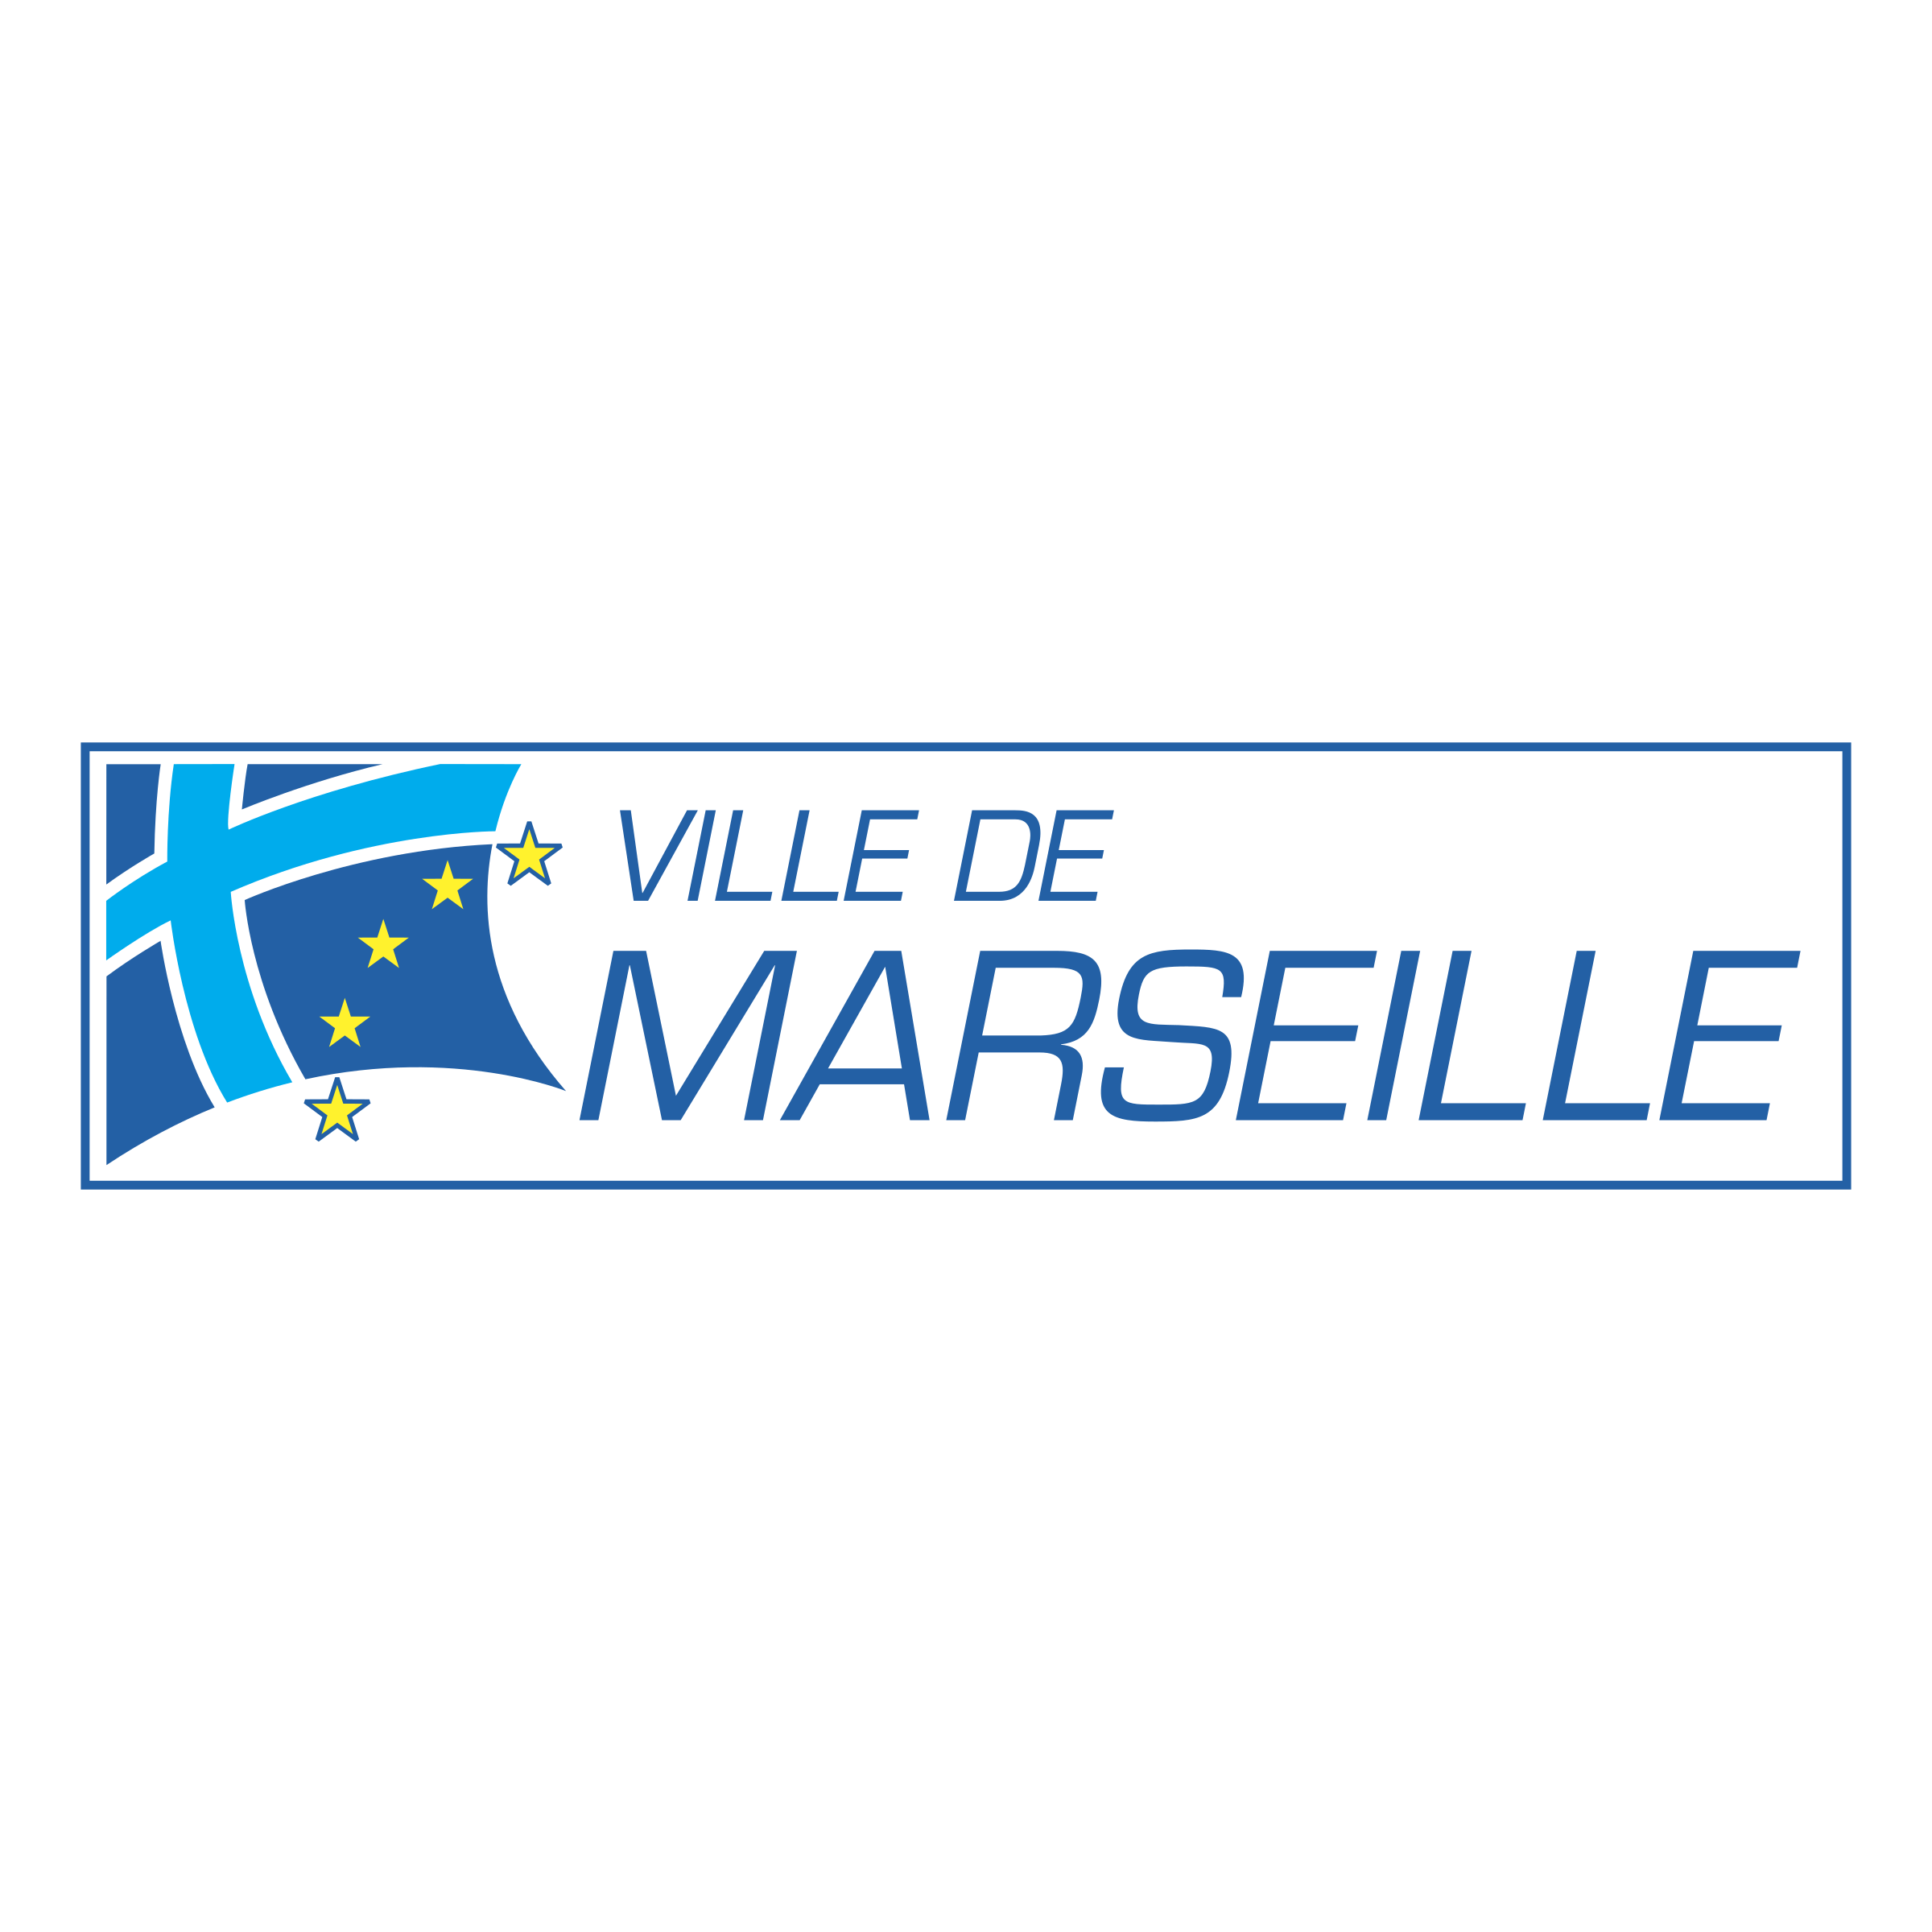 Marseille Logo - Ville de Marseille Logo PNG Transparent & SVG Vector - Freebie Supply